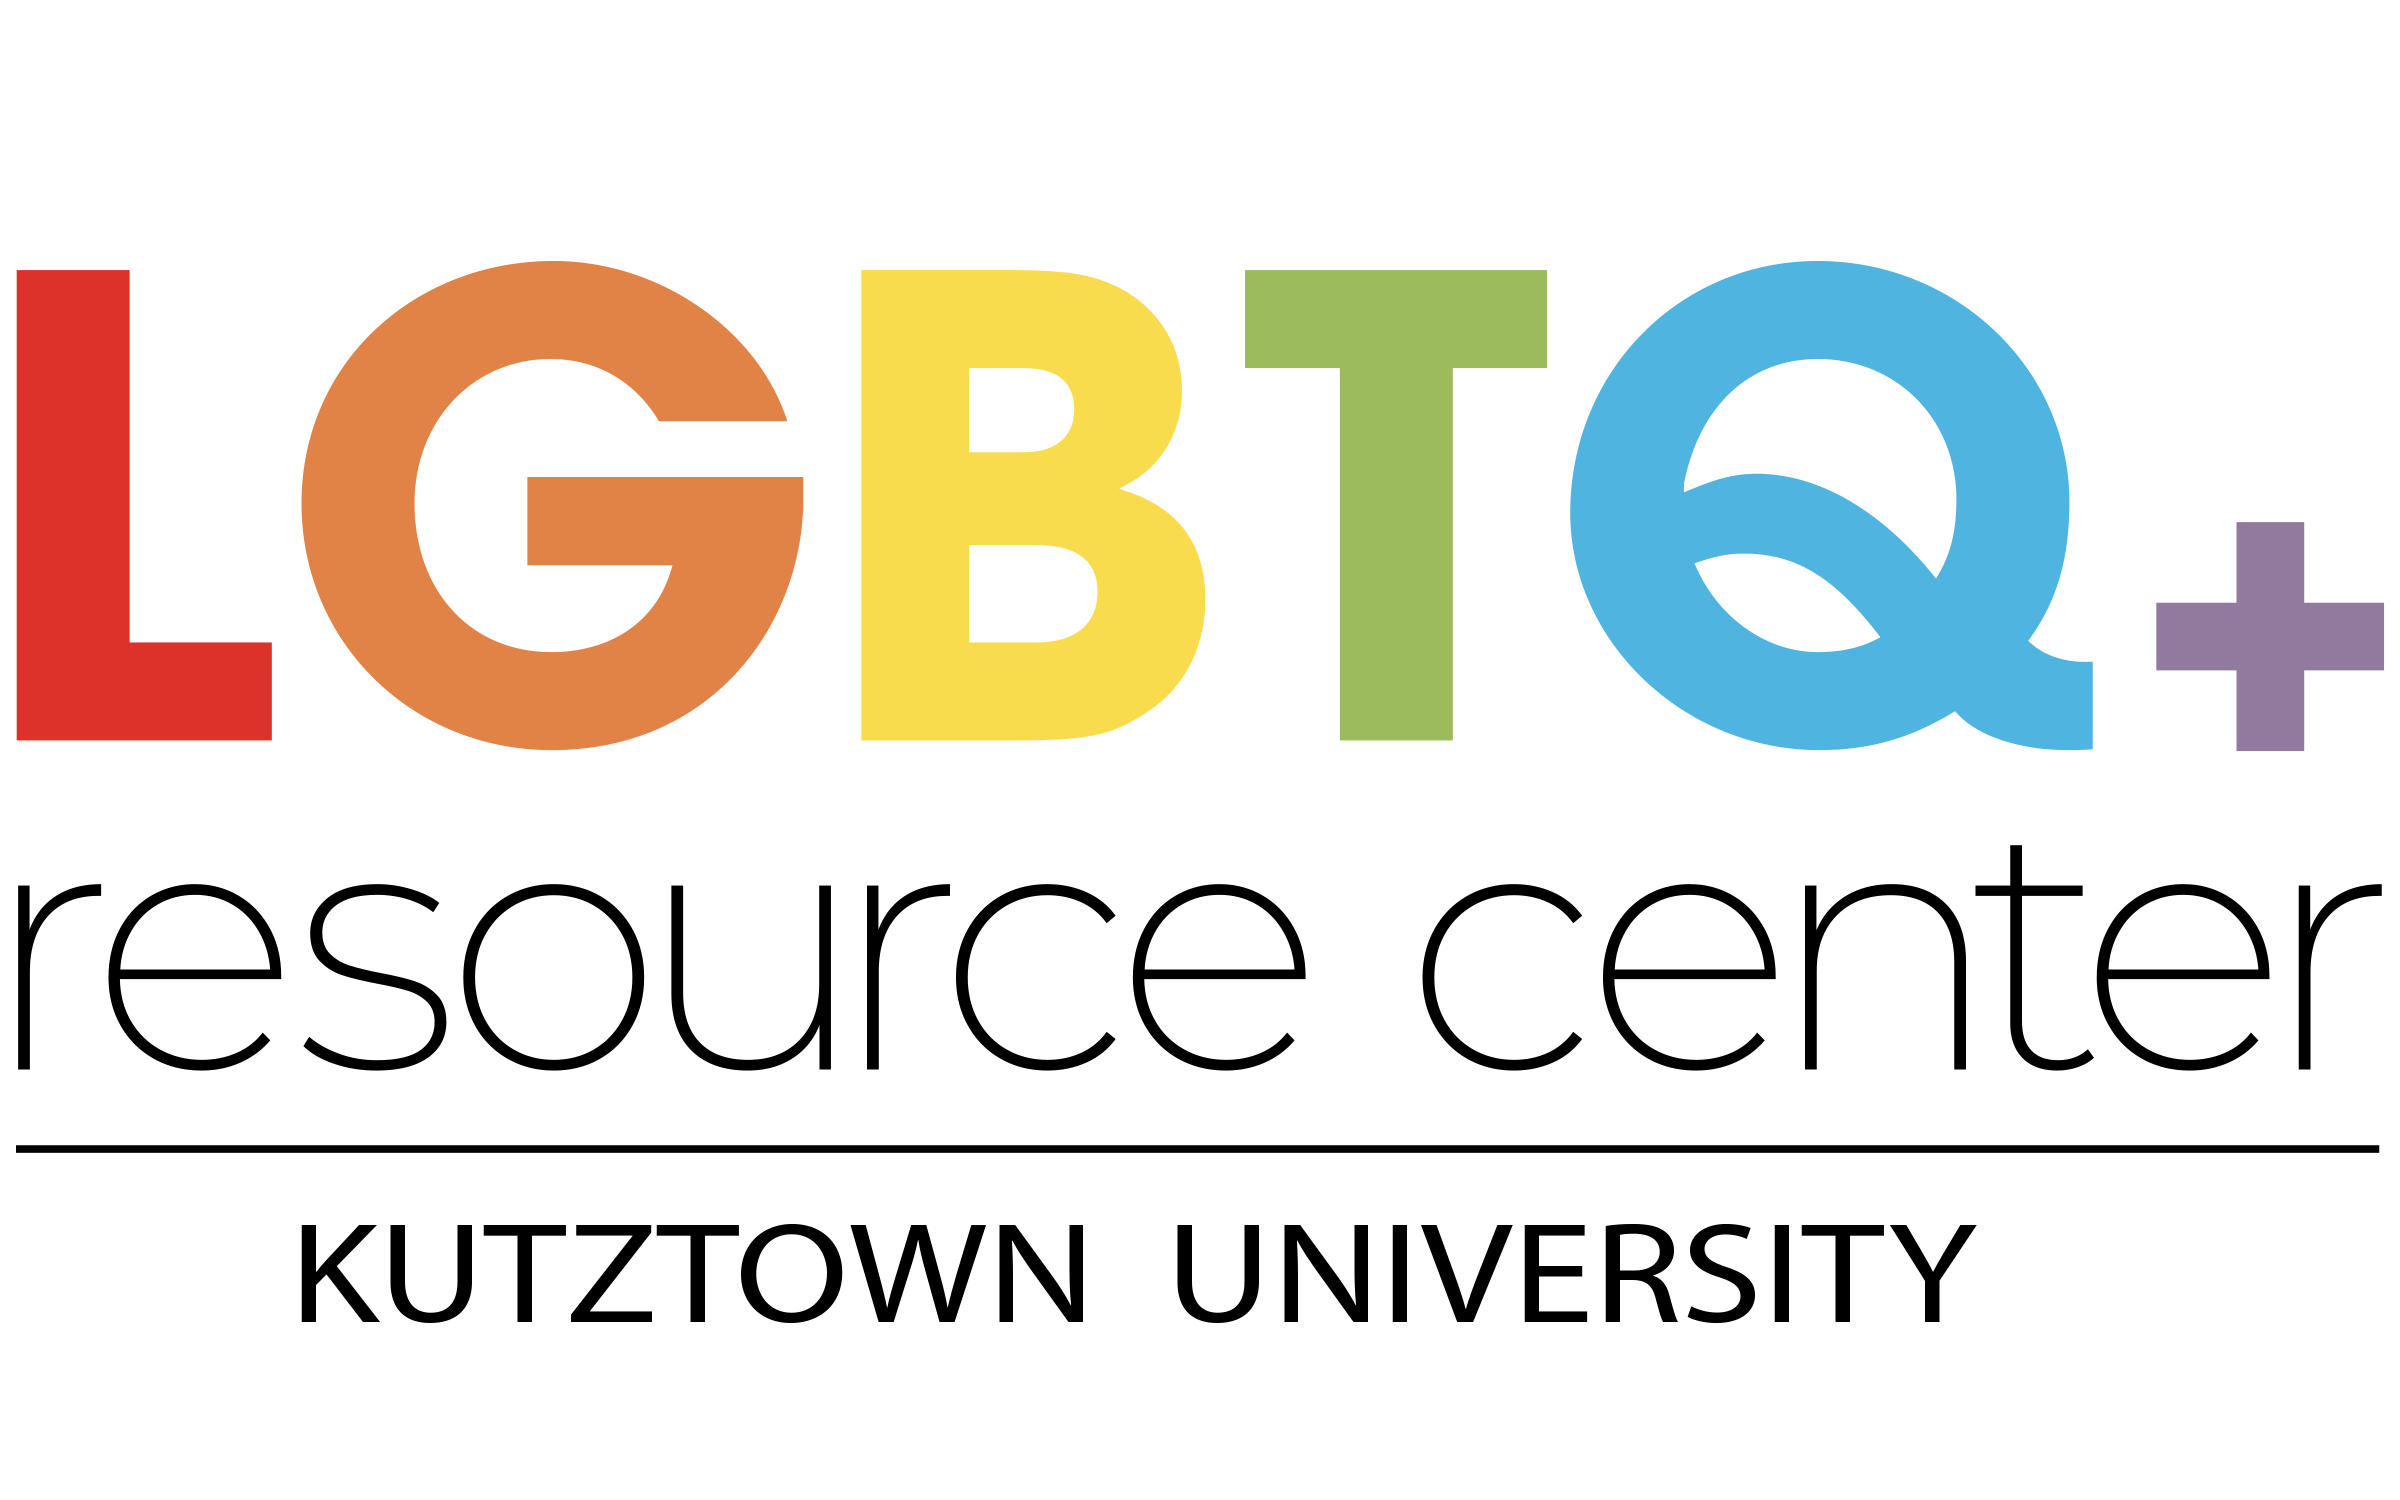 LGBTQ Resource Center logo in rainbow colors